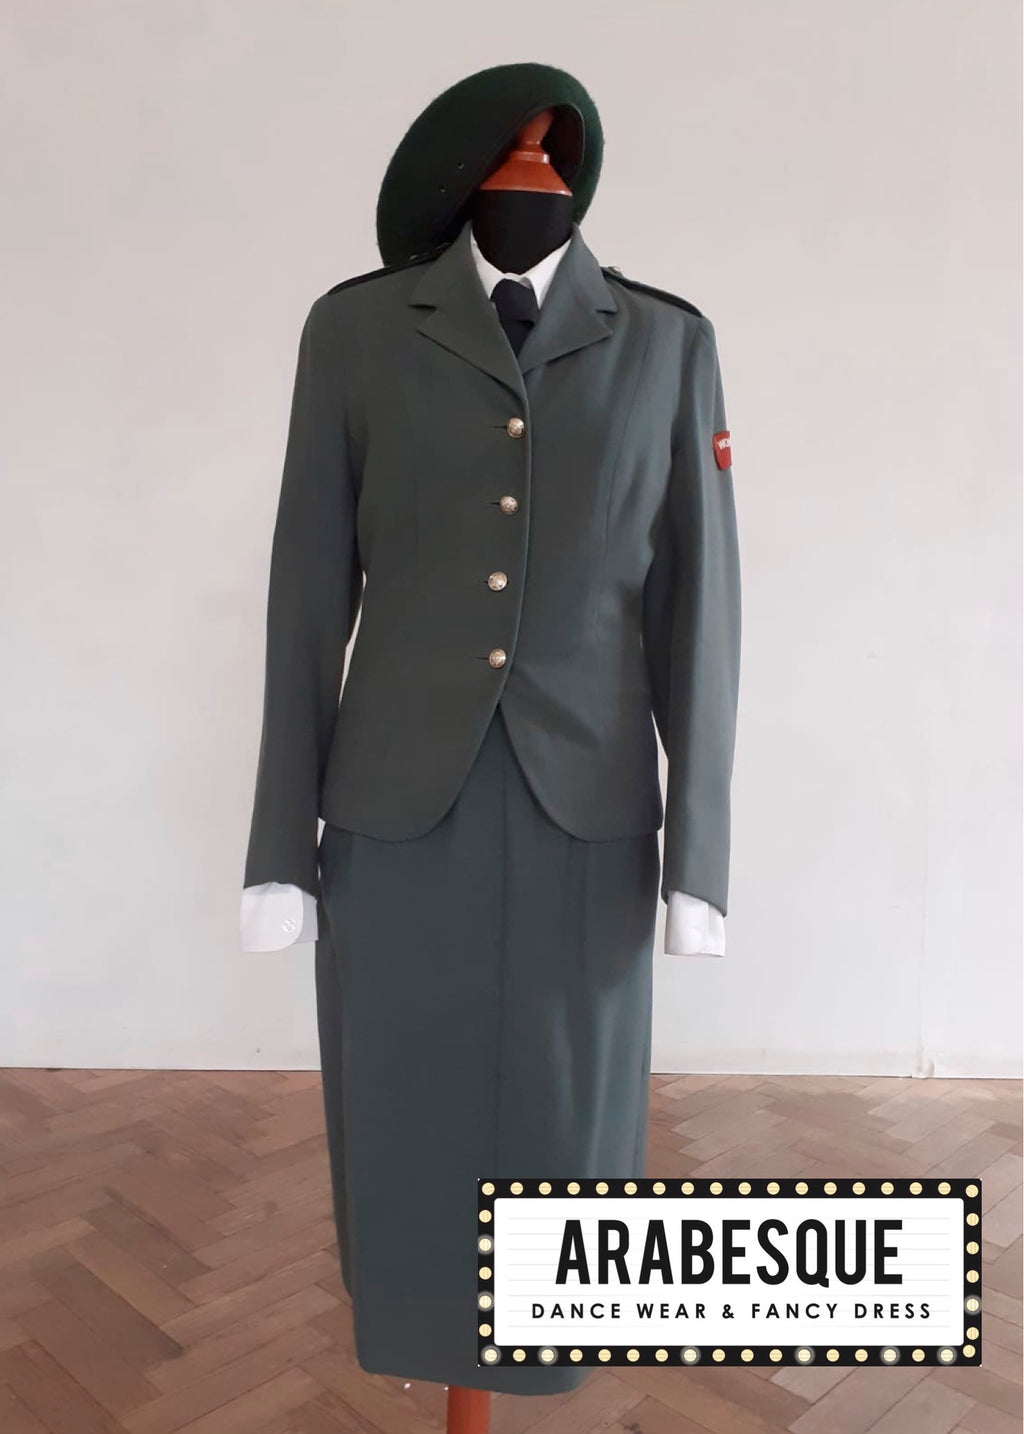 Ladies Royal Army Corp Uniform